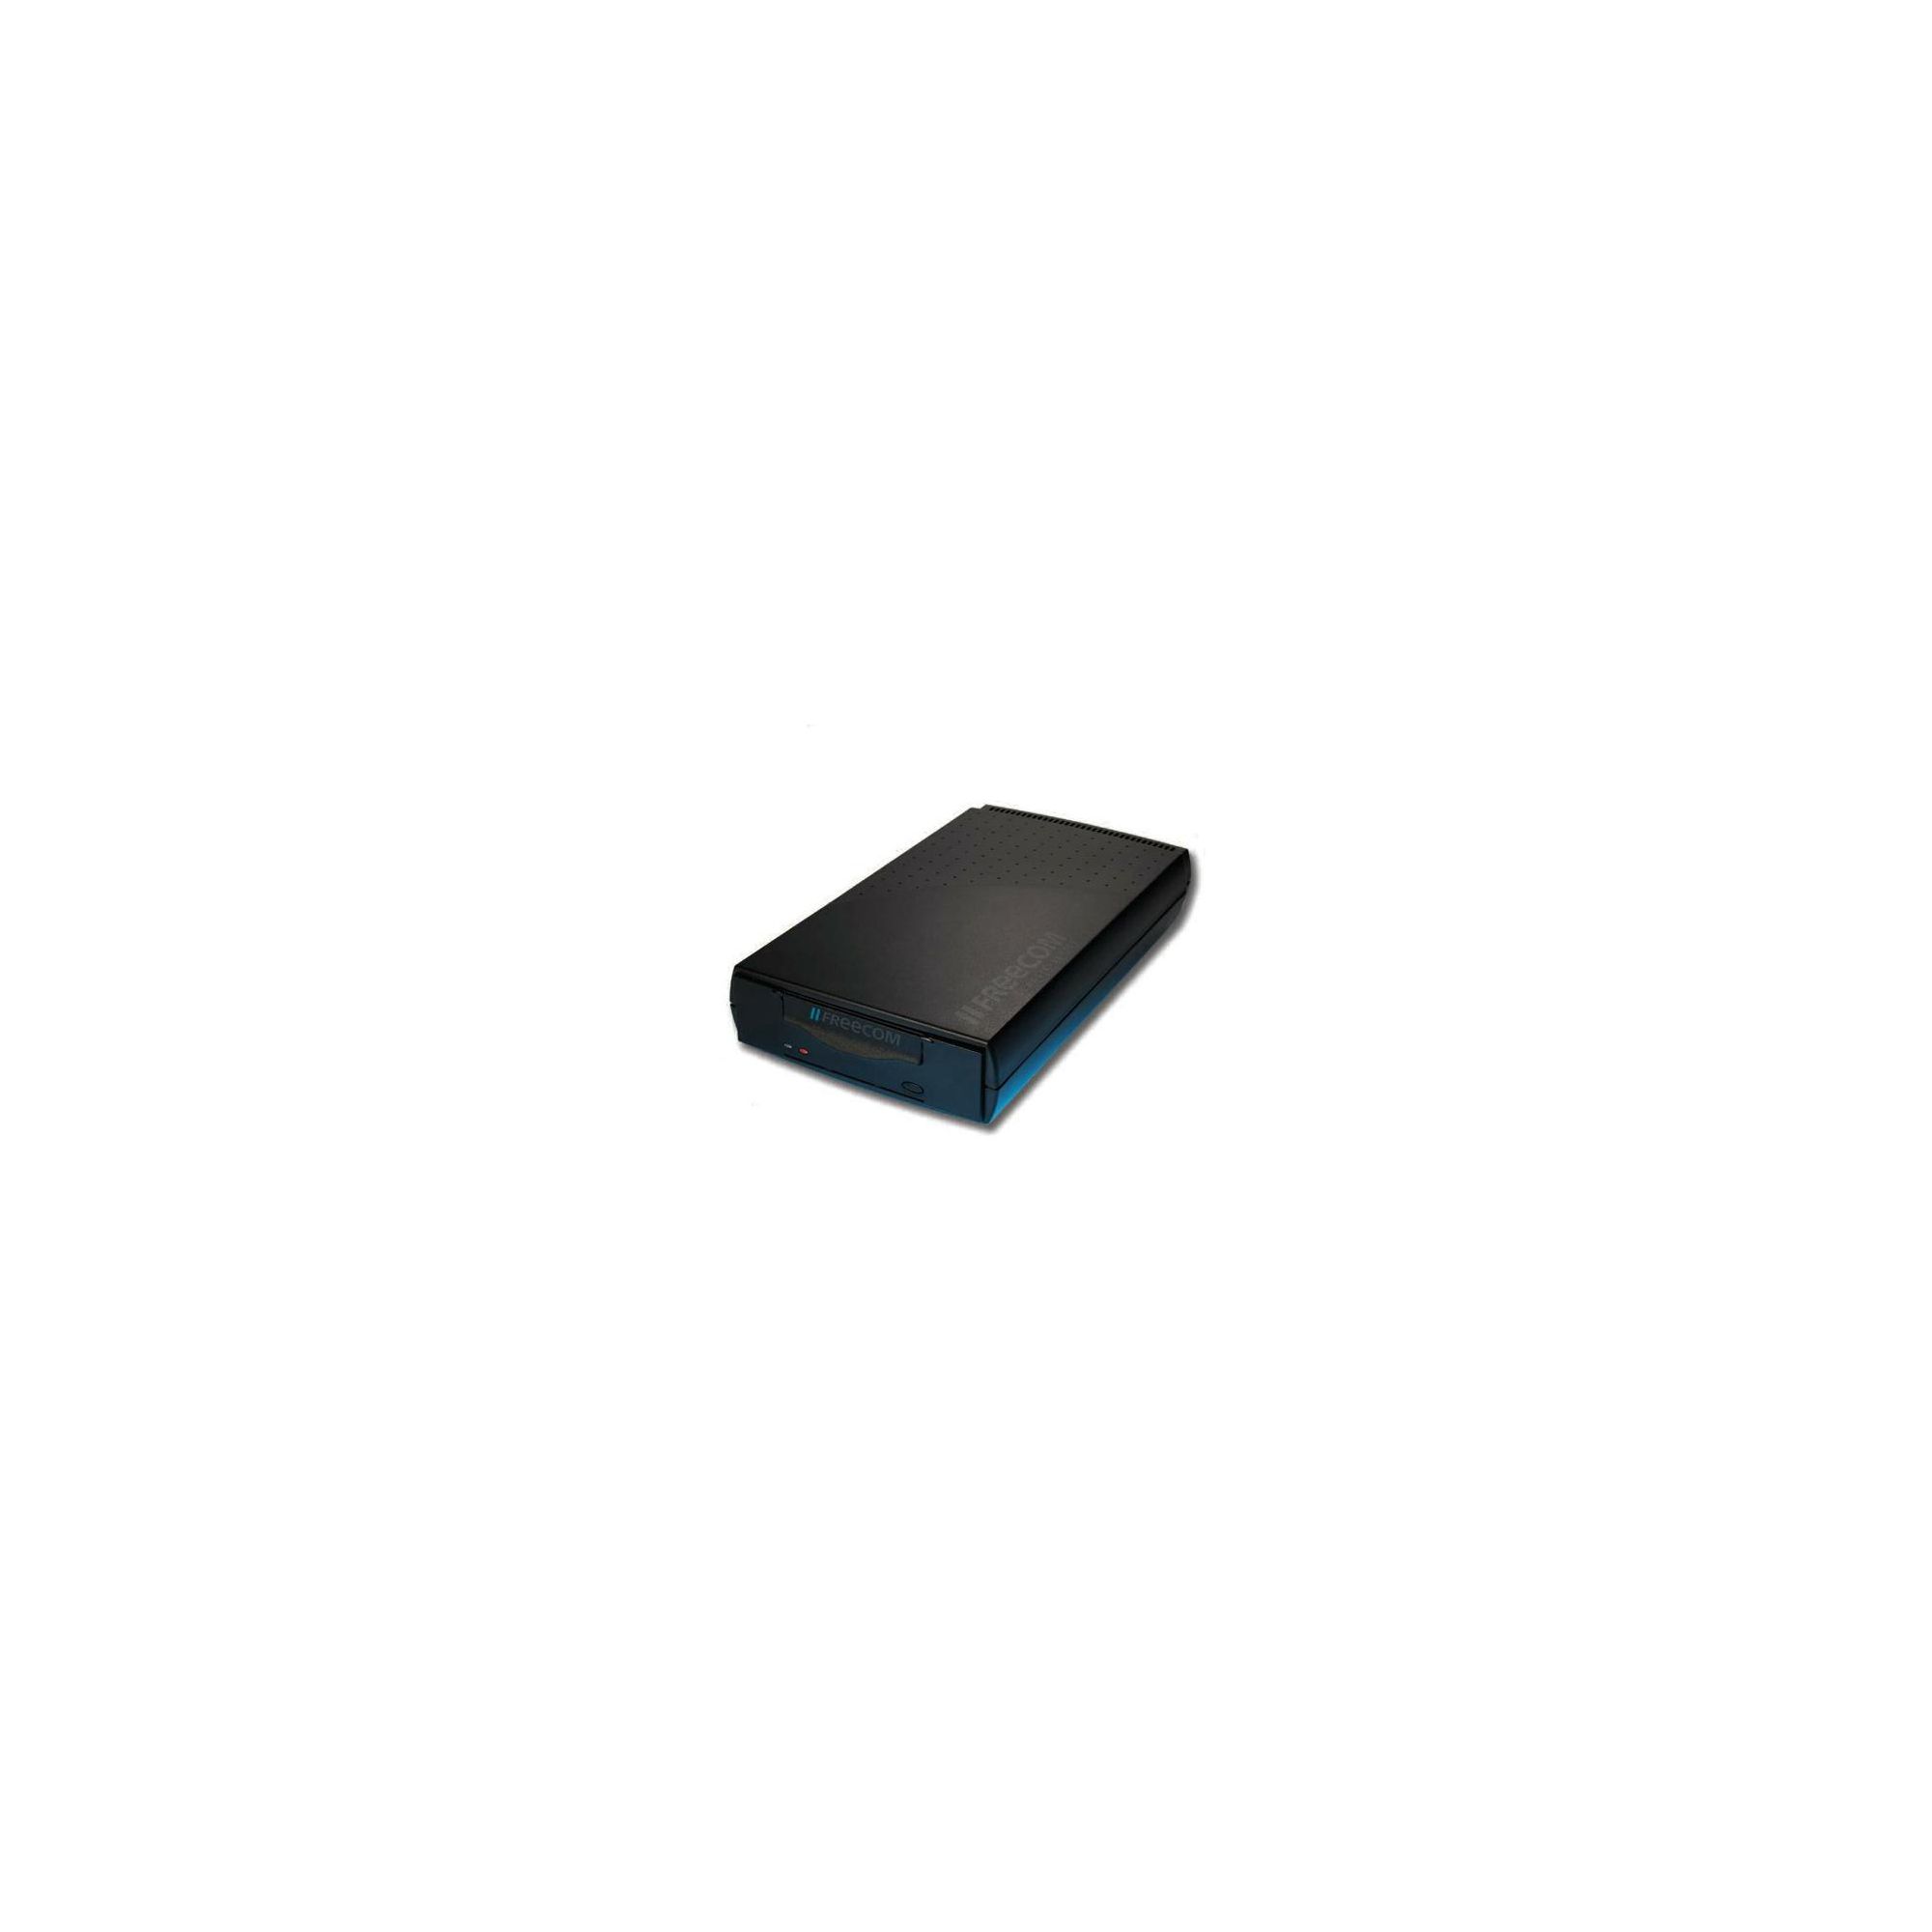 Freecom USB DAT-72i External Tape Drive 36-72GB at Tesco Direct